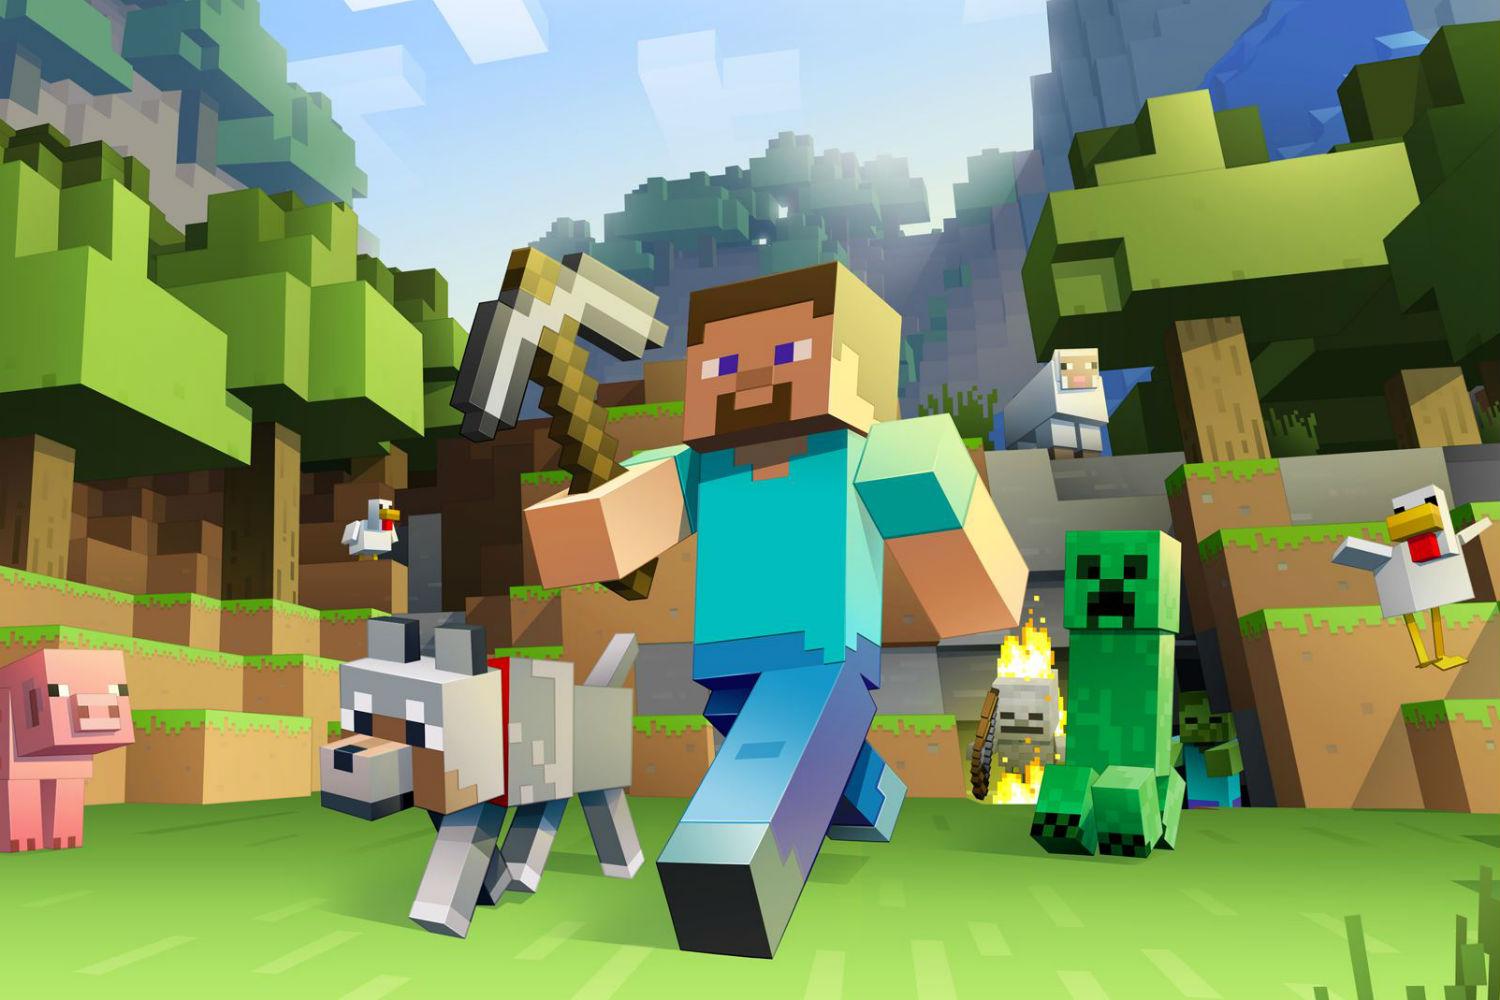 Minecraft: Windows 10 Edition Beta and Pocket Edition updated